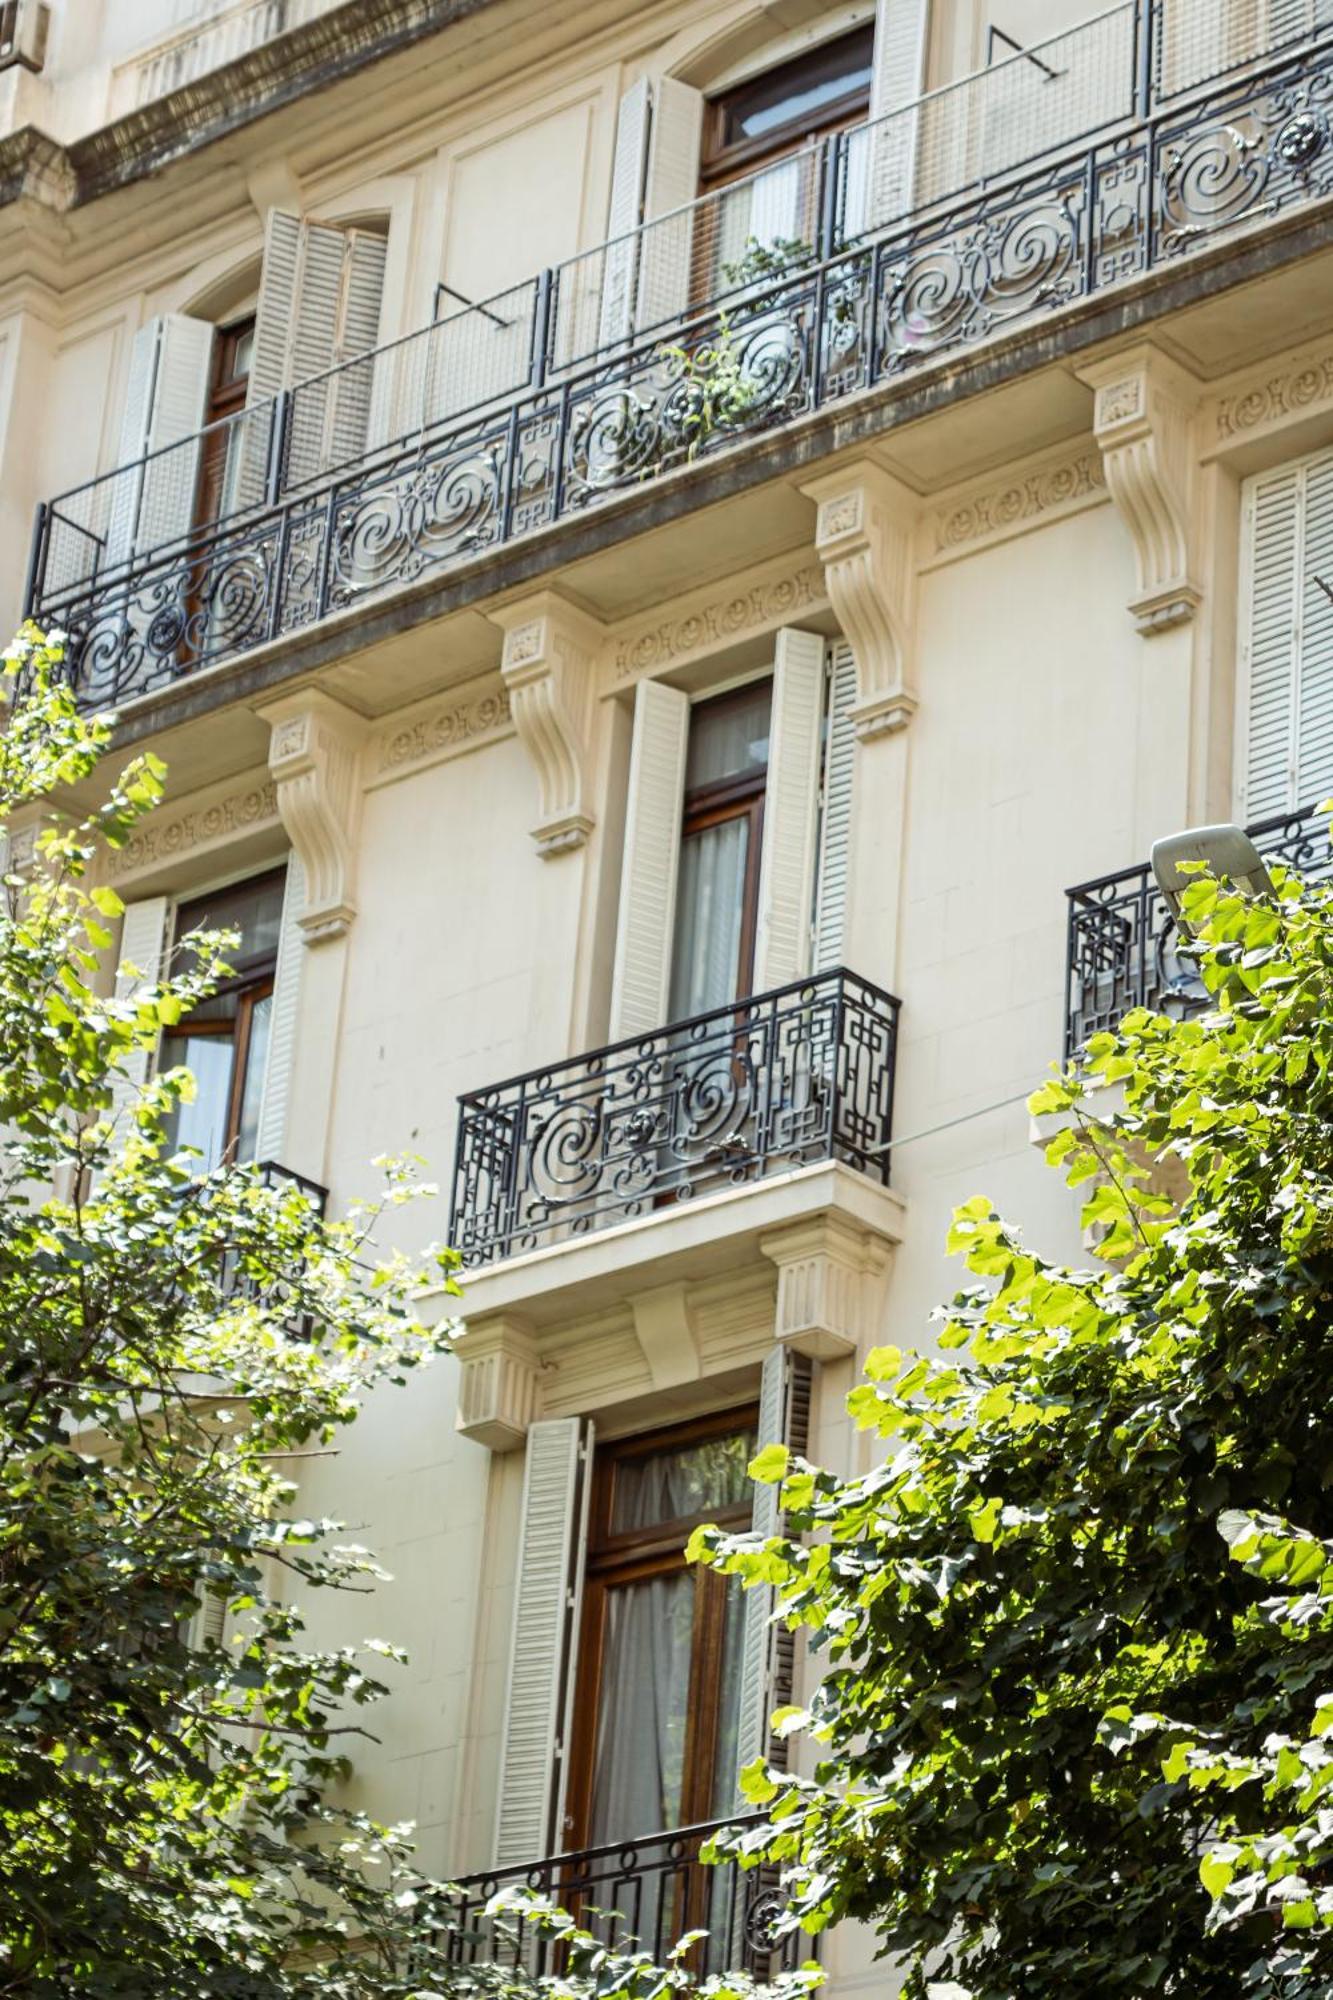 Bens - Recoleta Park Hotel Buenos Aires Exterior photo